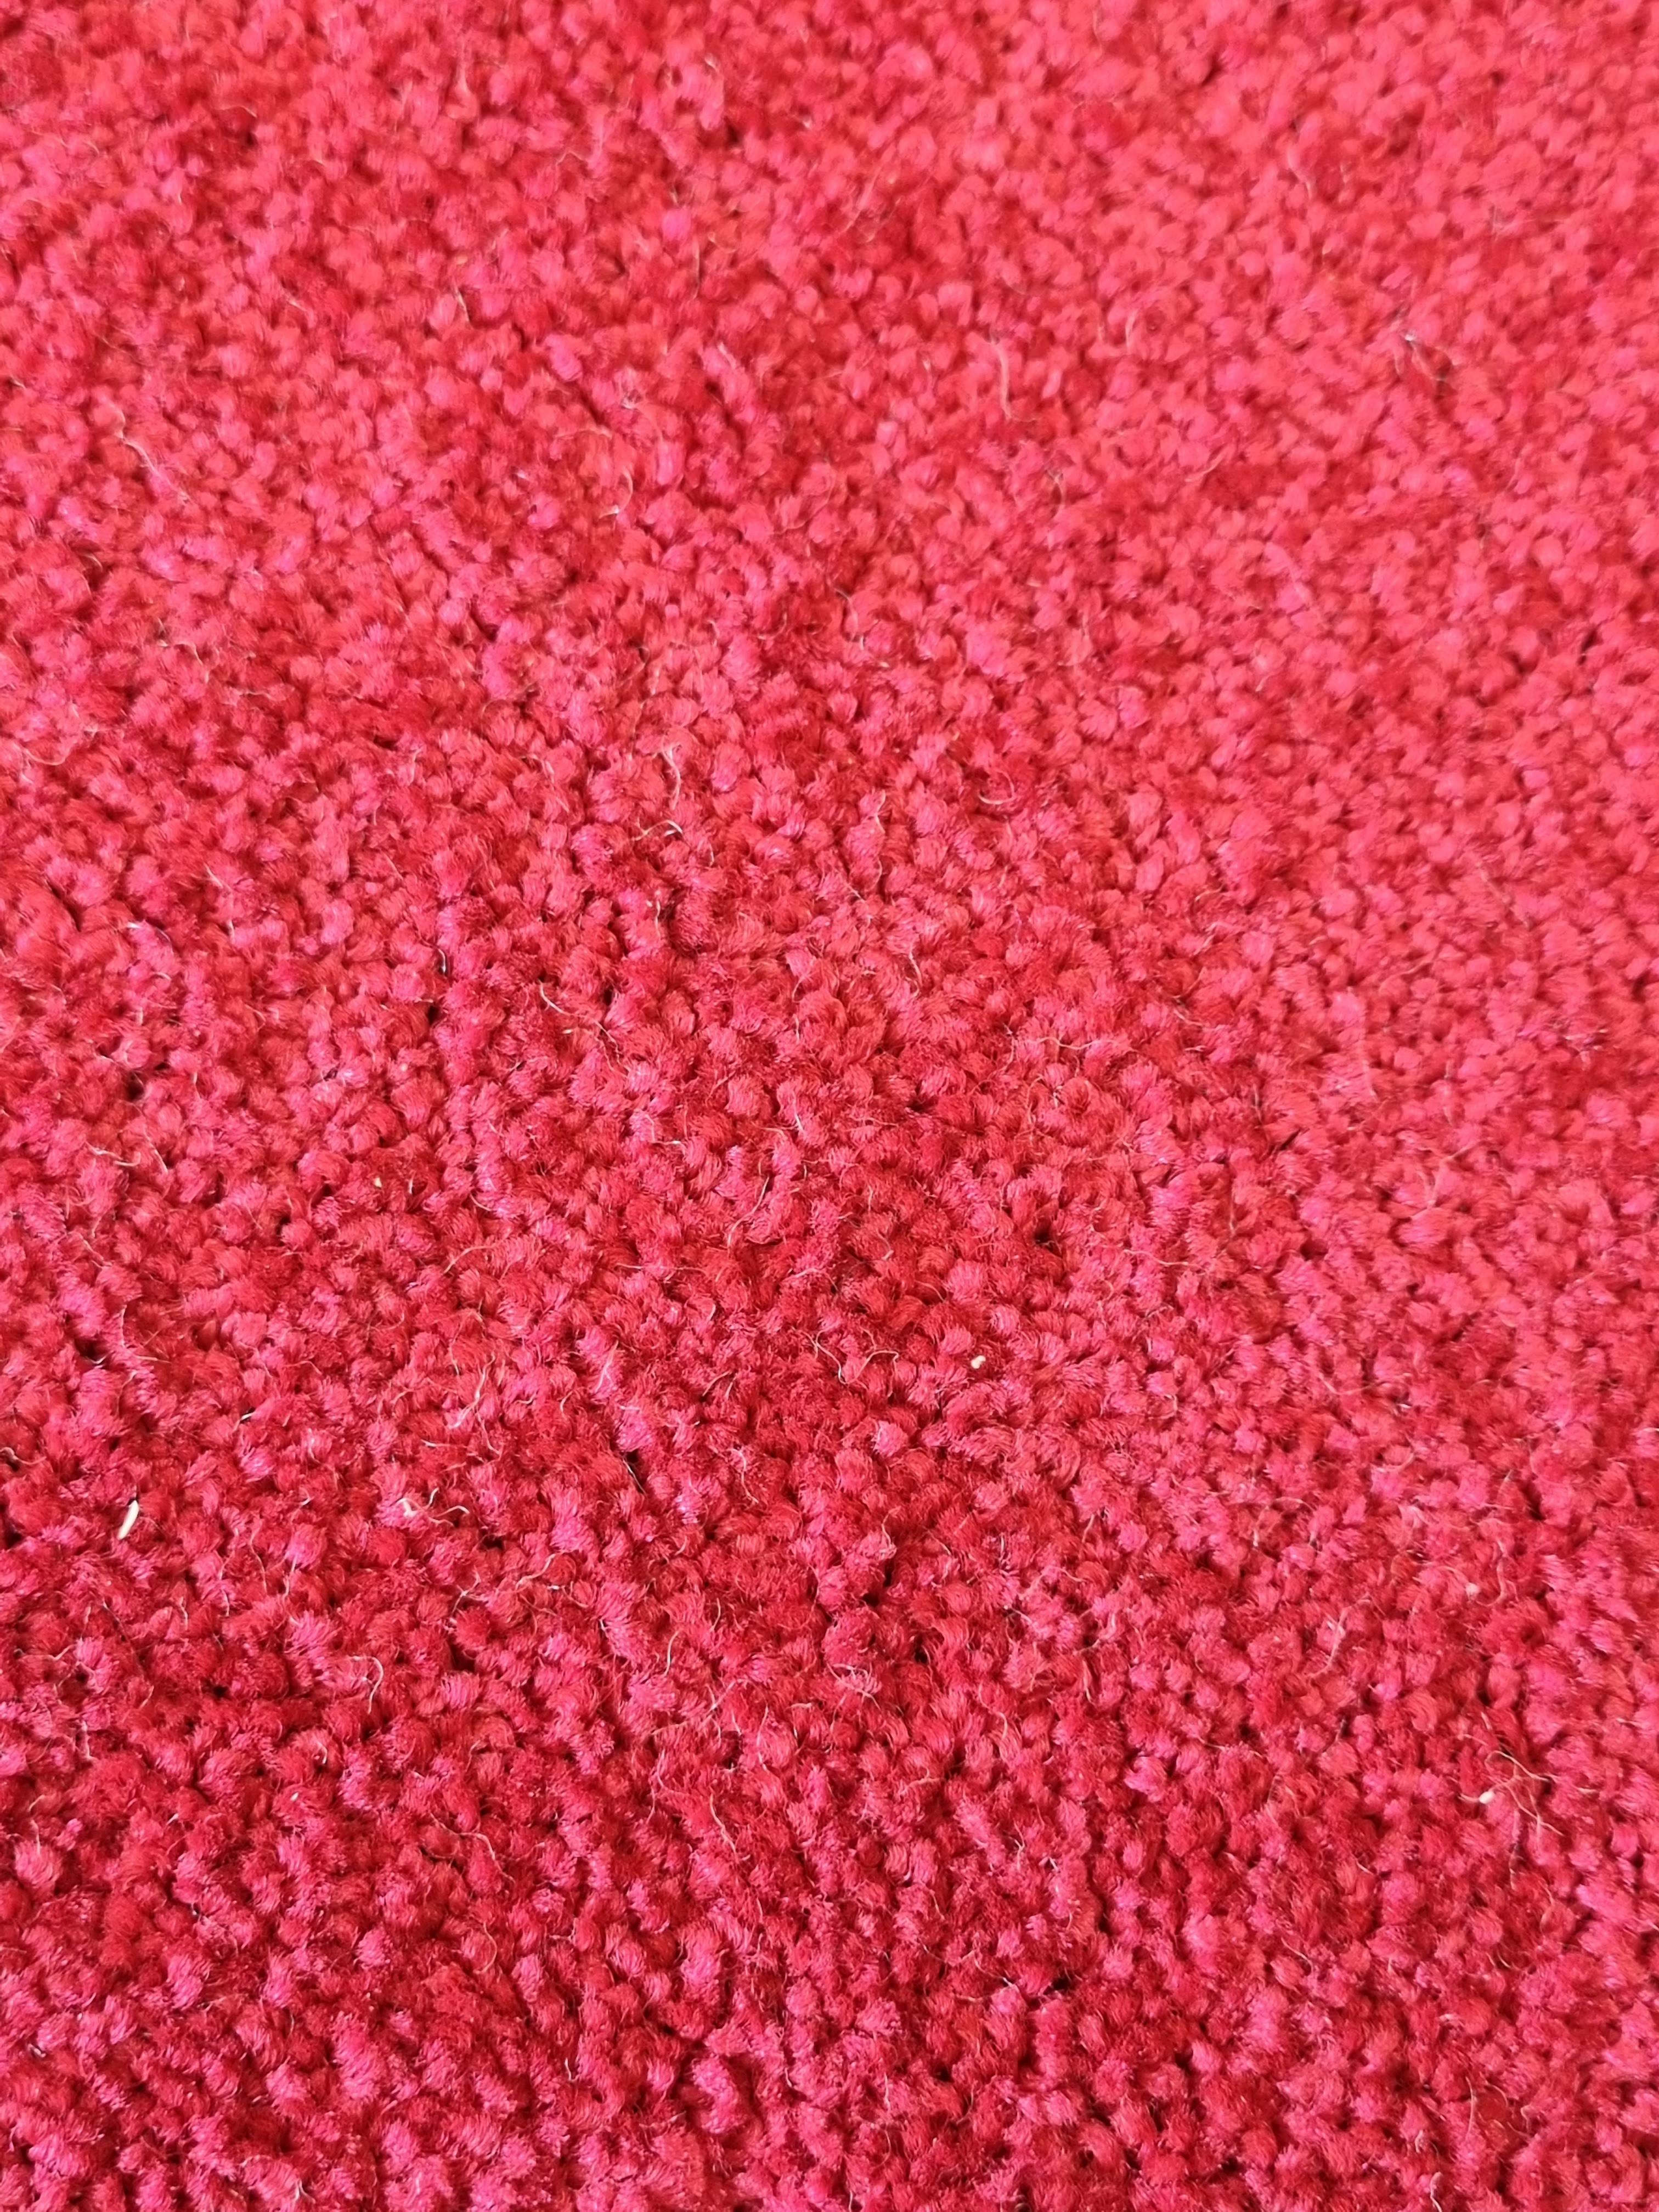 Pier twist carpet